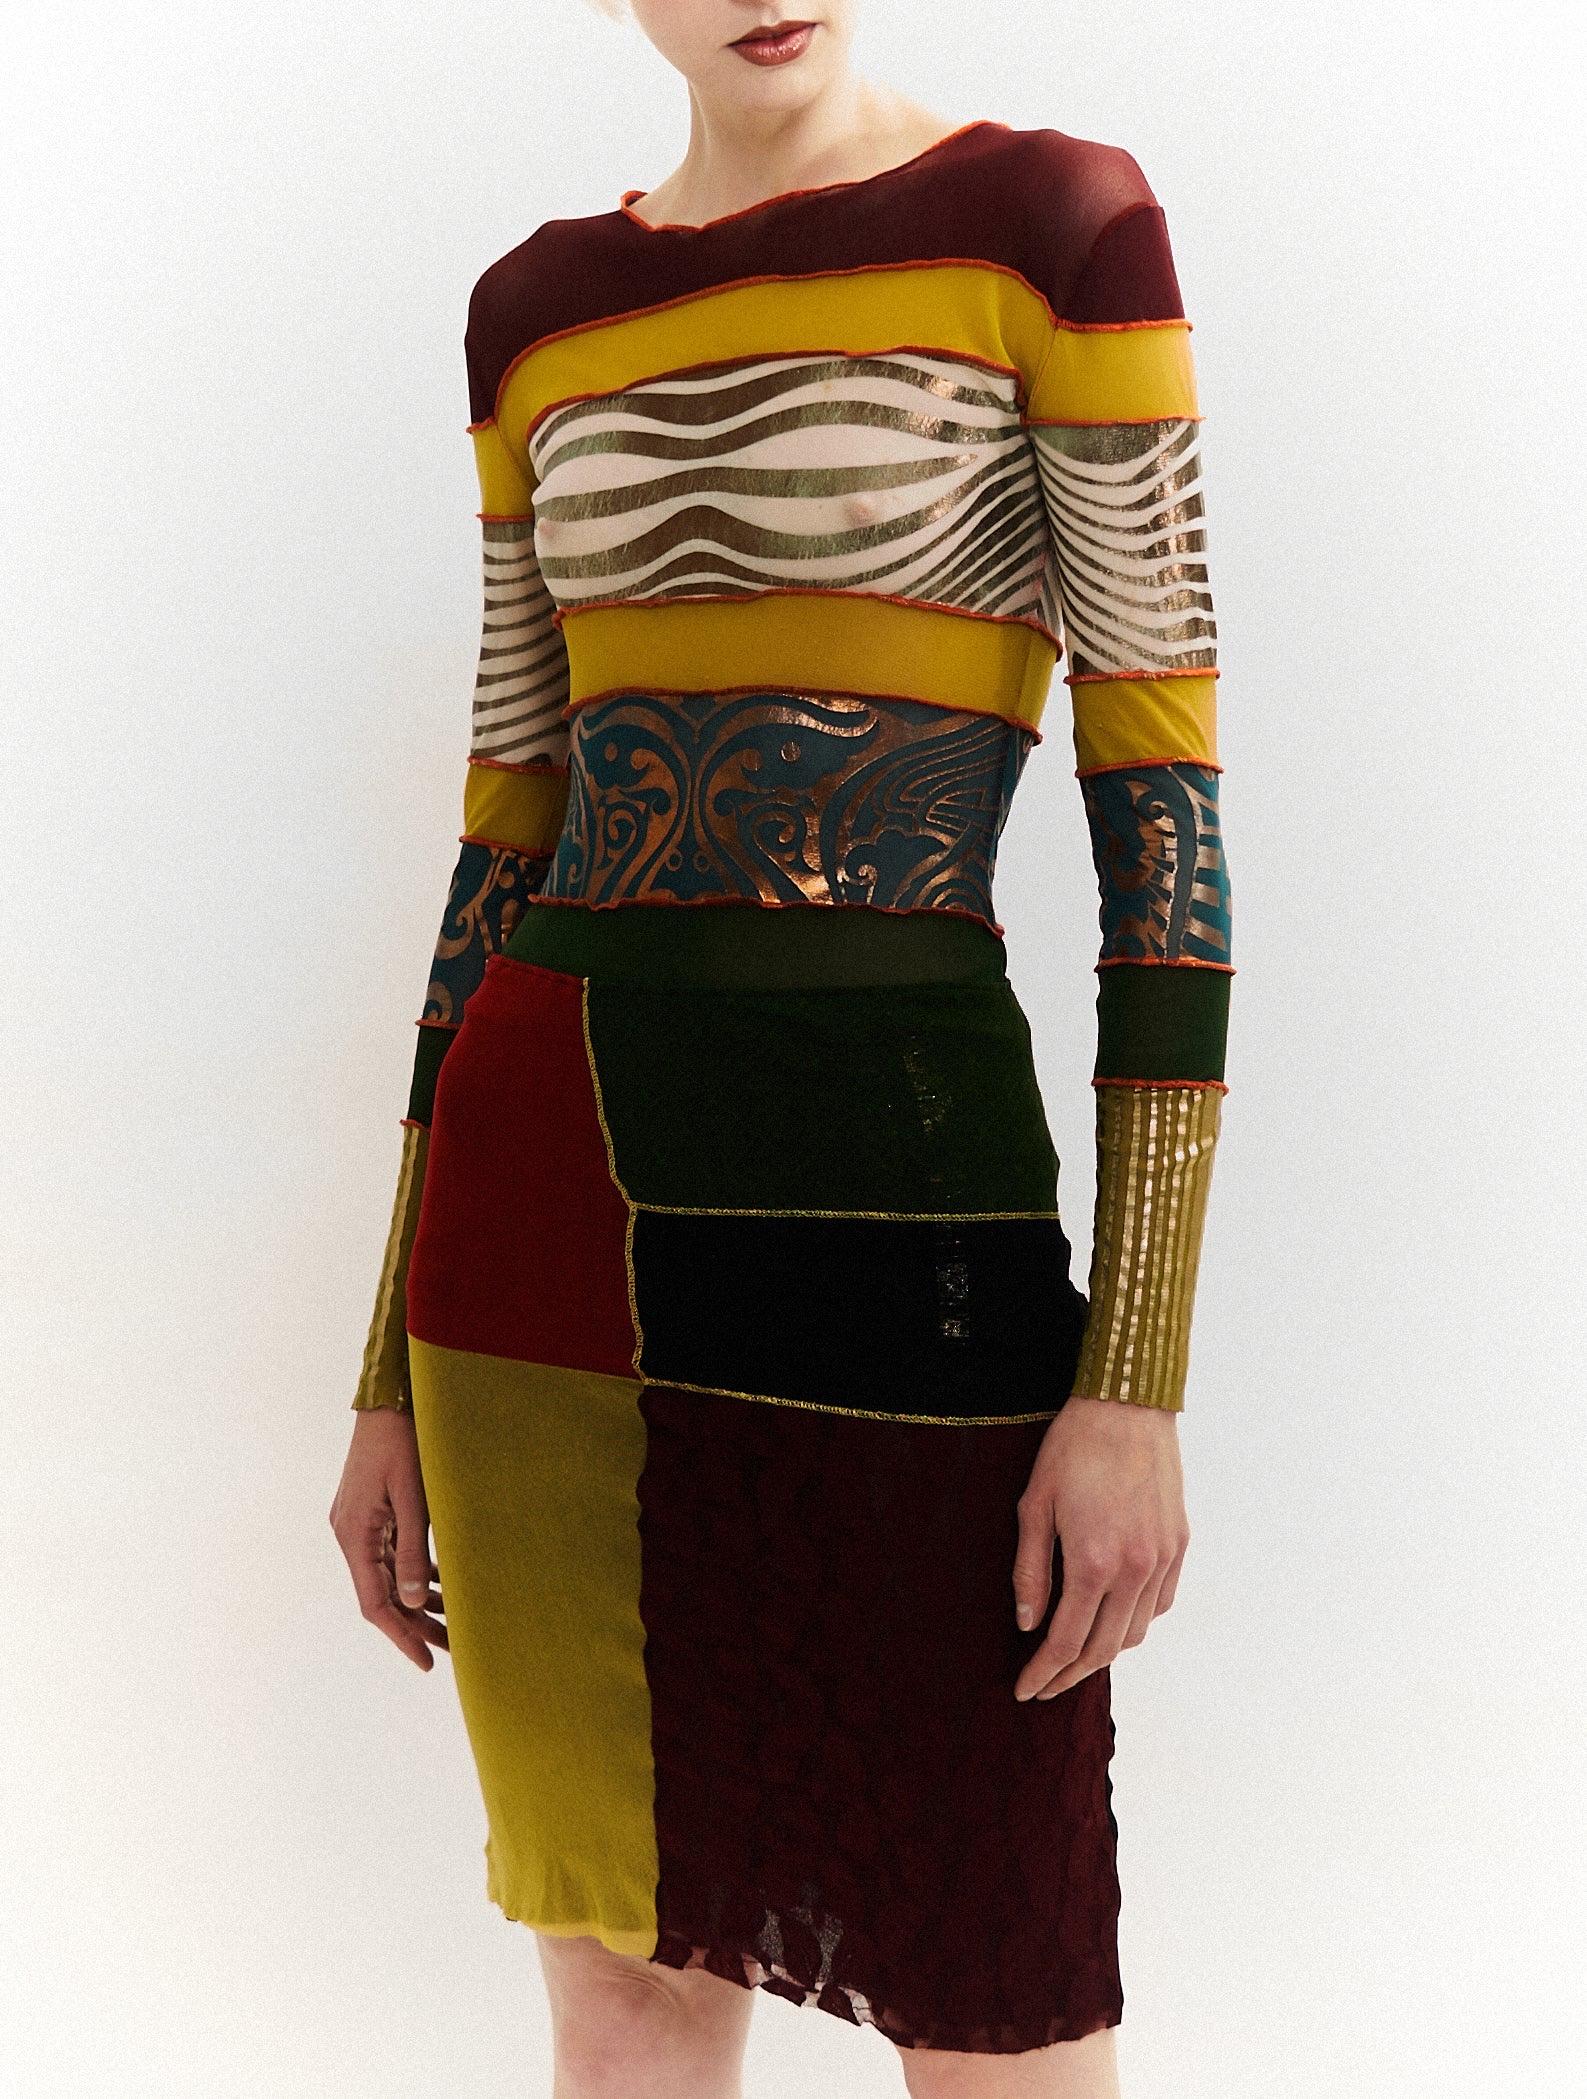 Women's Jean Paul Gaultier S/S 1996 Cyberbaba Mesh Foil Print Top & Skirt Ensemble For Sale